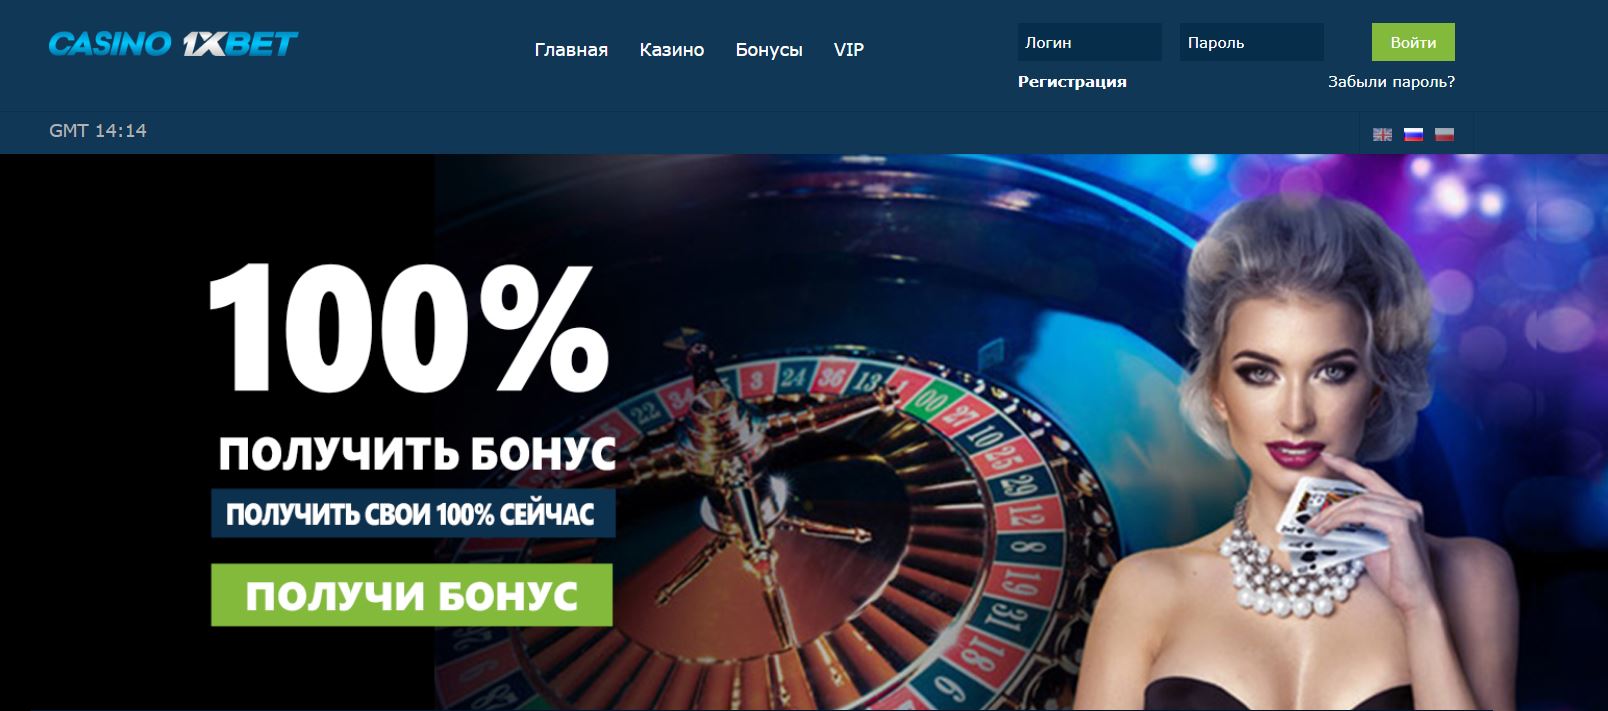 Https casino x1262 com ru форум казино х